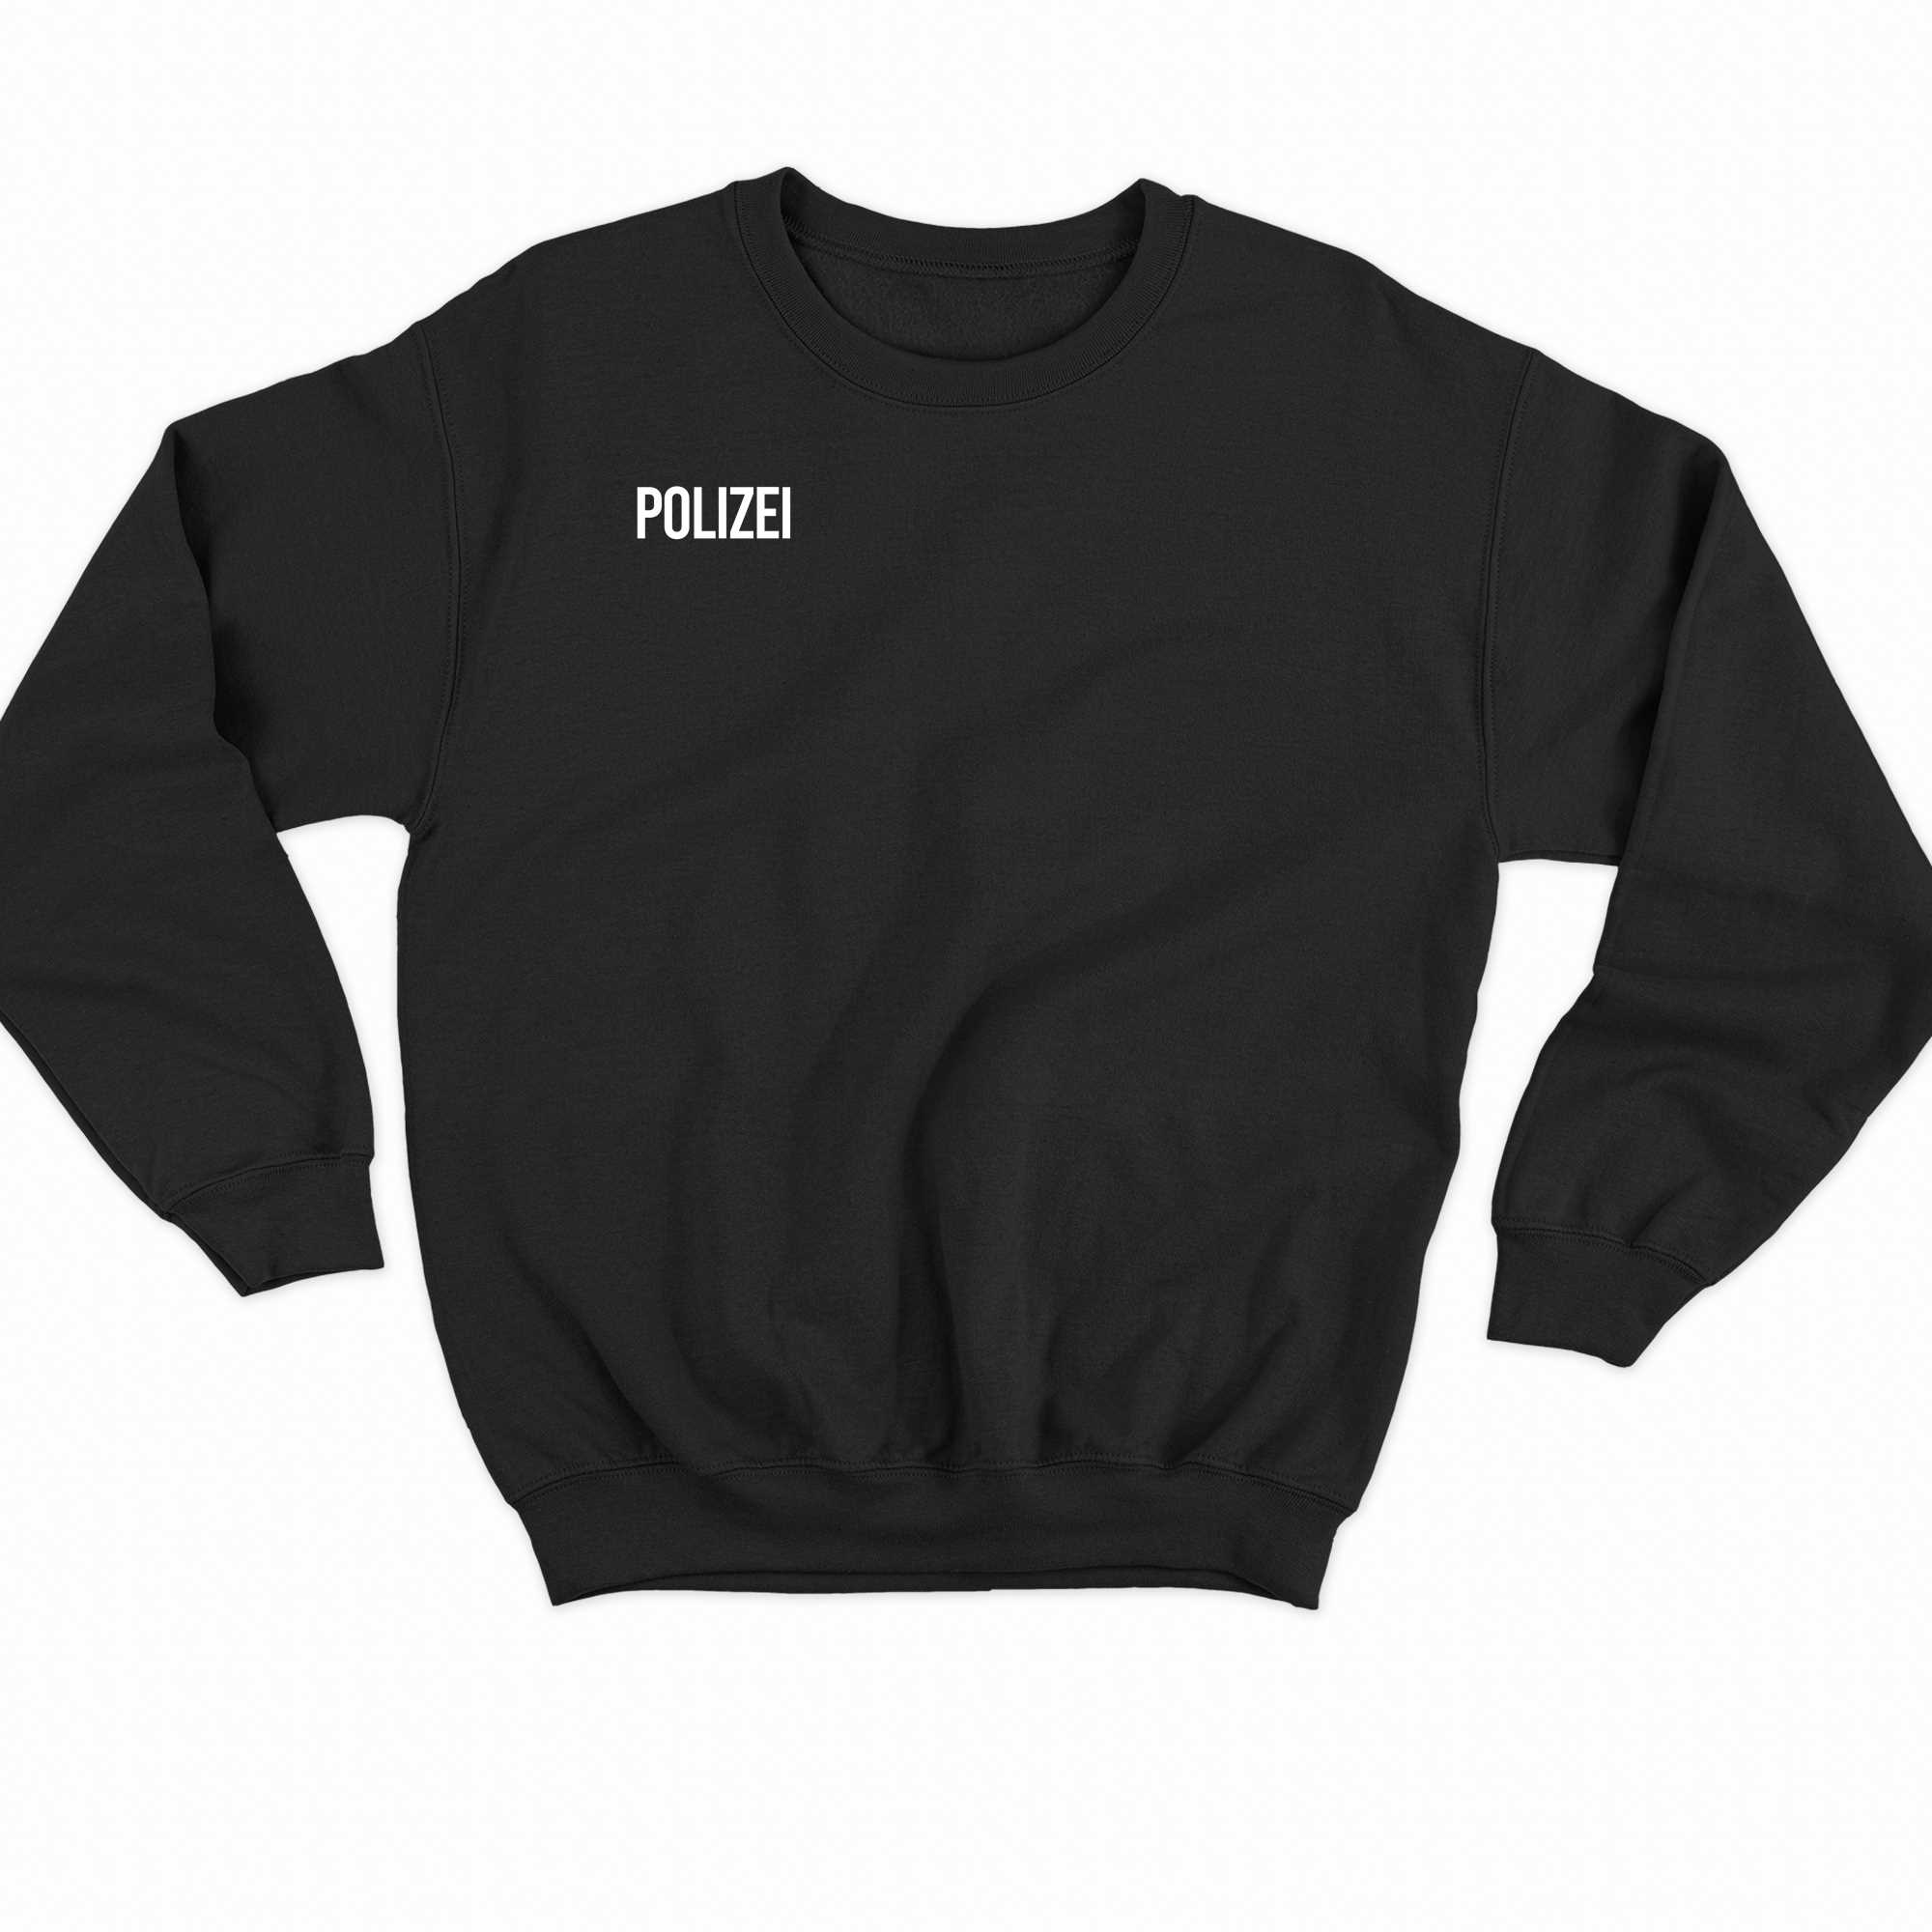 Official Kanye West Polizei Black Shirt 